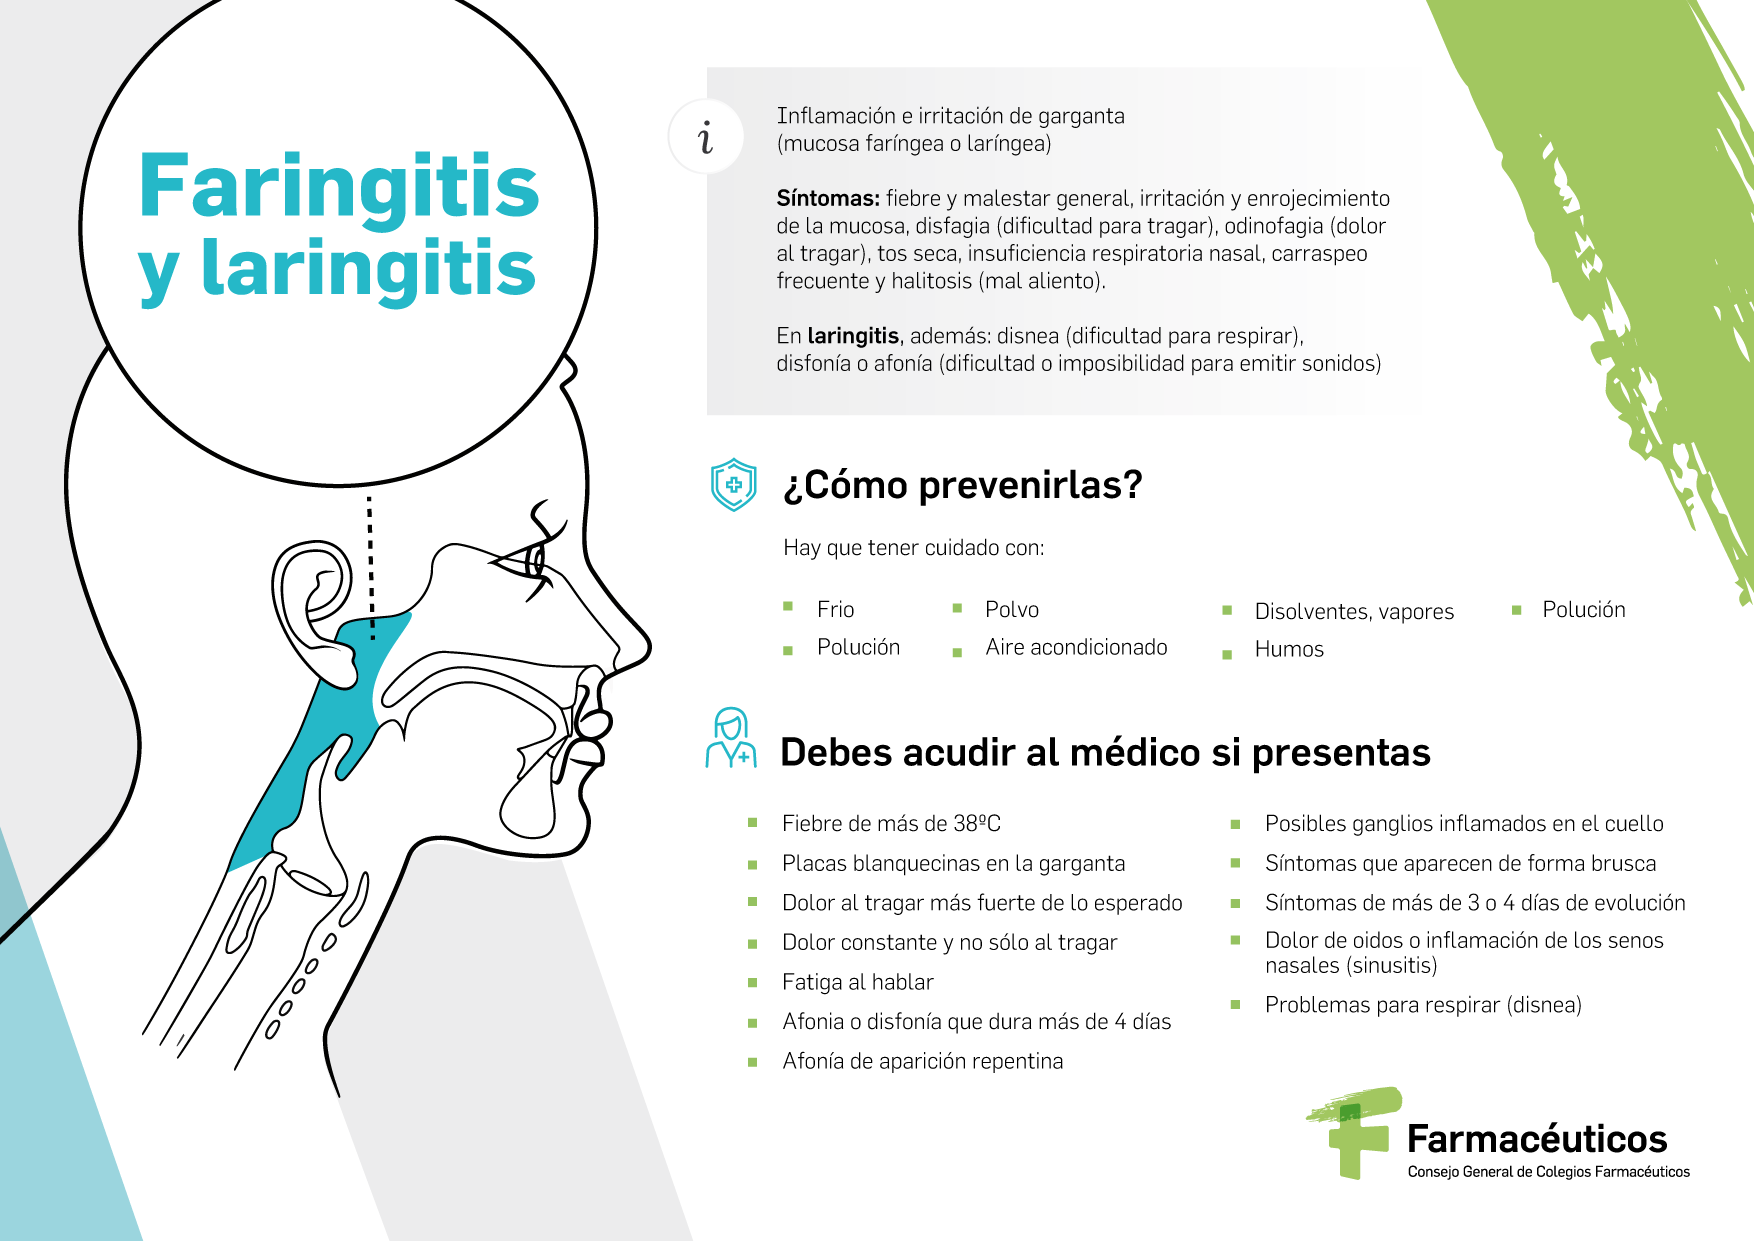 Infografía Faringitis y laringitis - Farmacéuticos